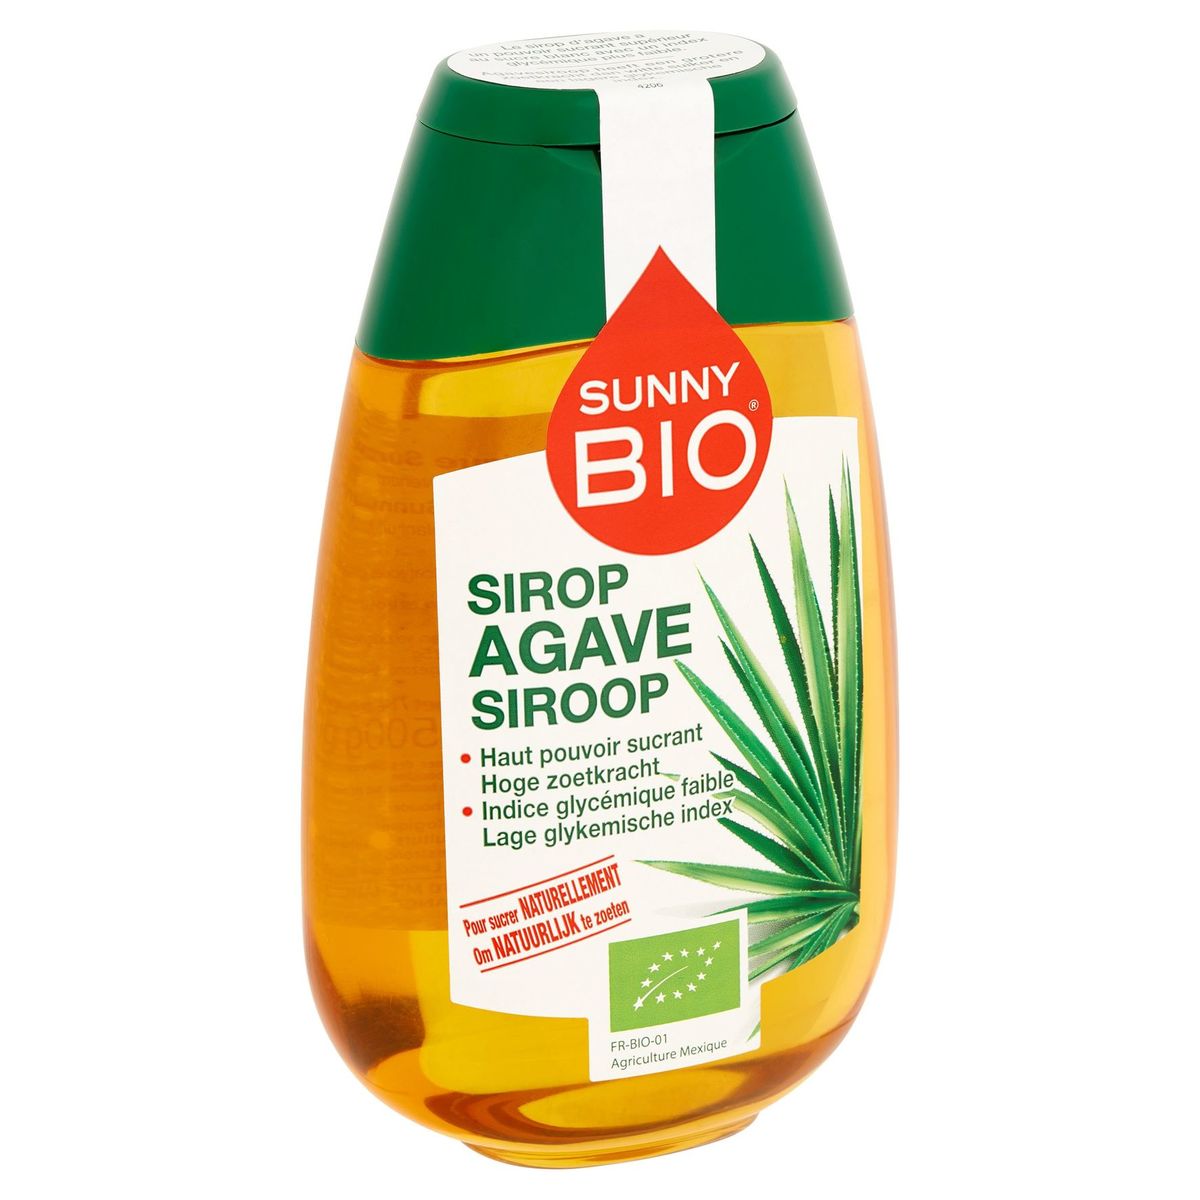 Sunny Bio Agave Siroop 500 g